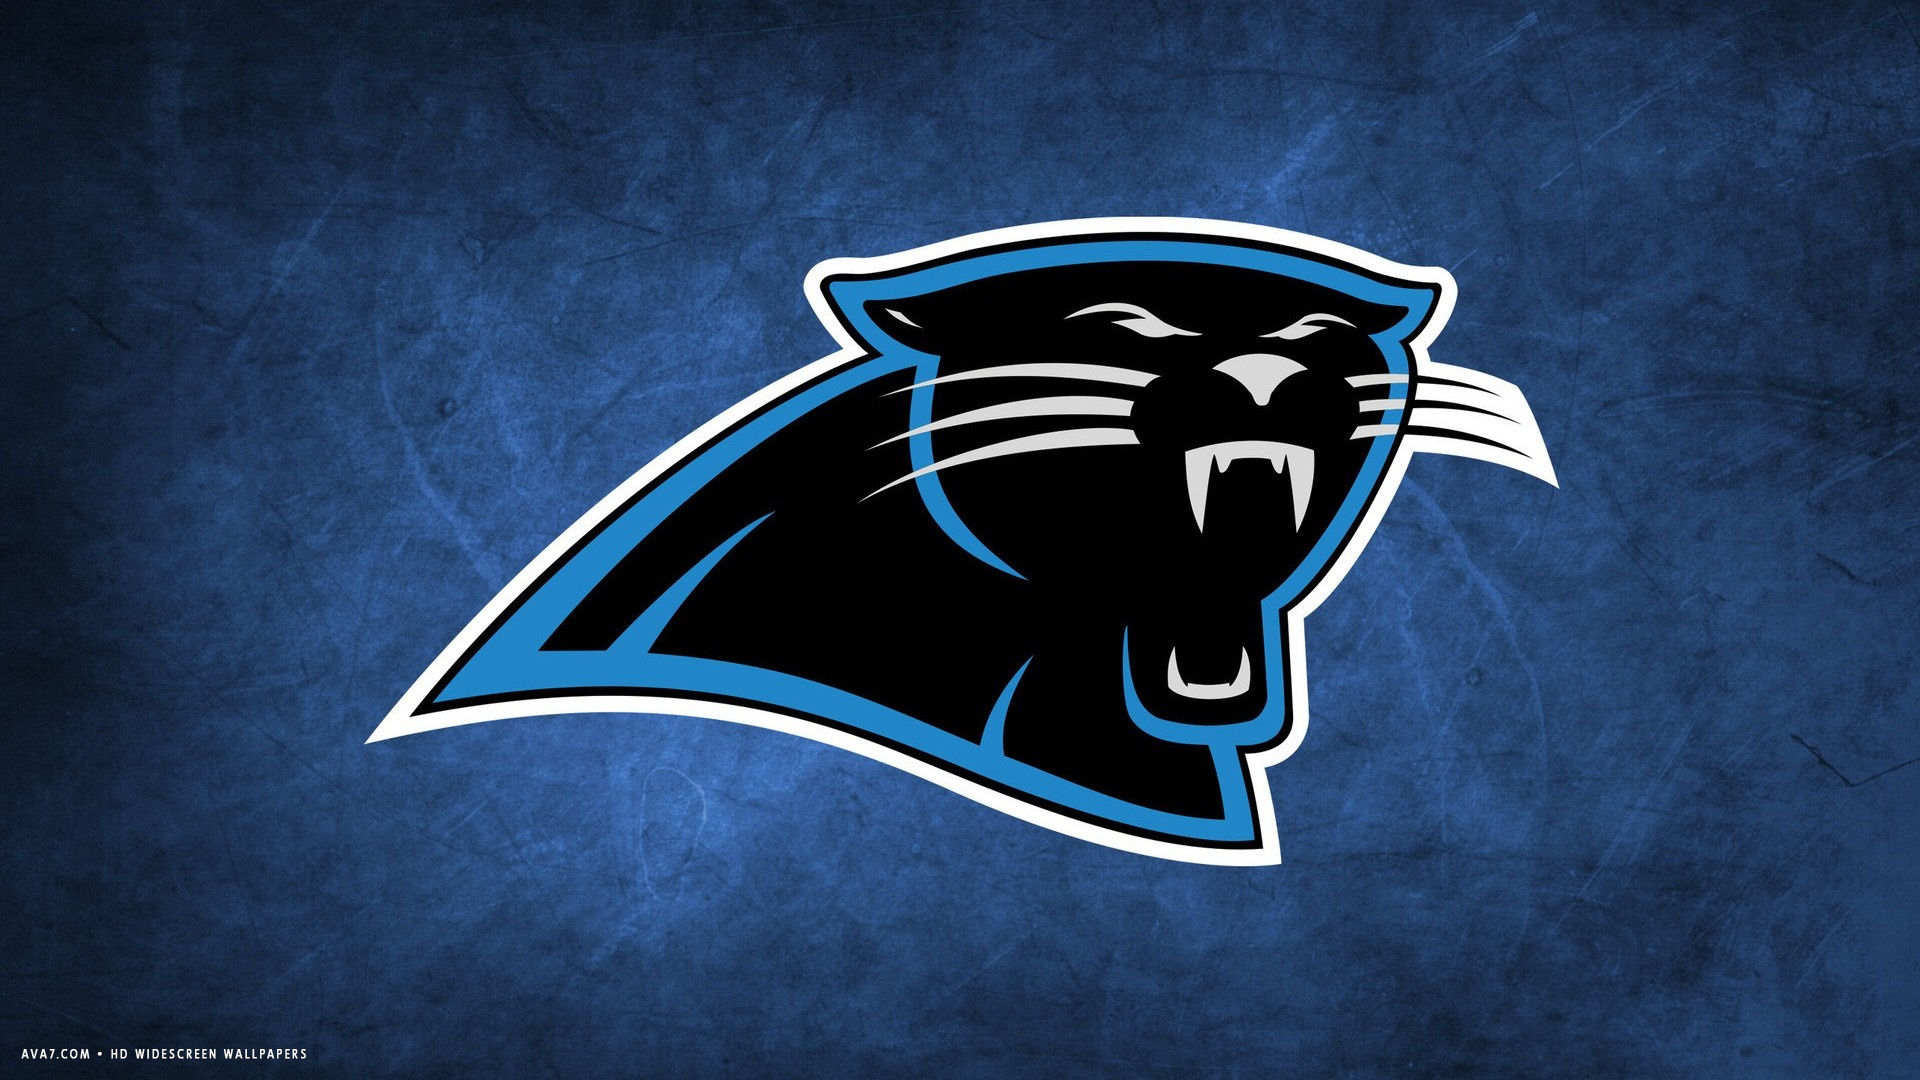 Carolina Panthers Nfl Football Team HD Widescreen Wallpaper American